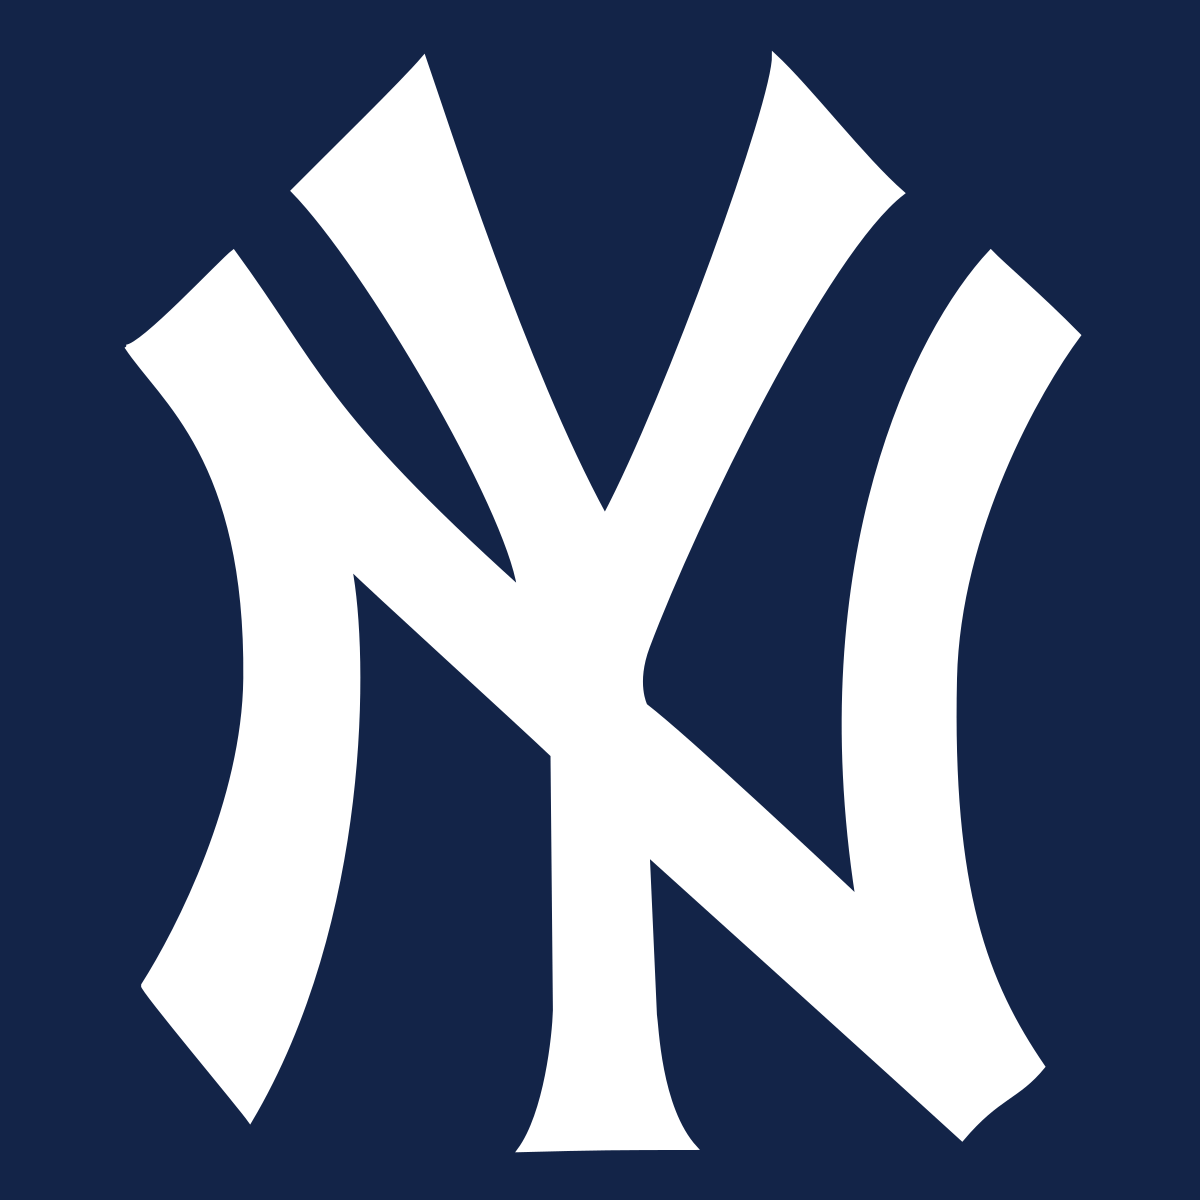 New York Yankees Team Logo - 2018 New York Yankees season